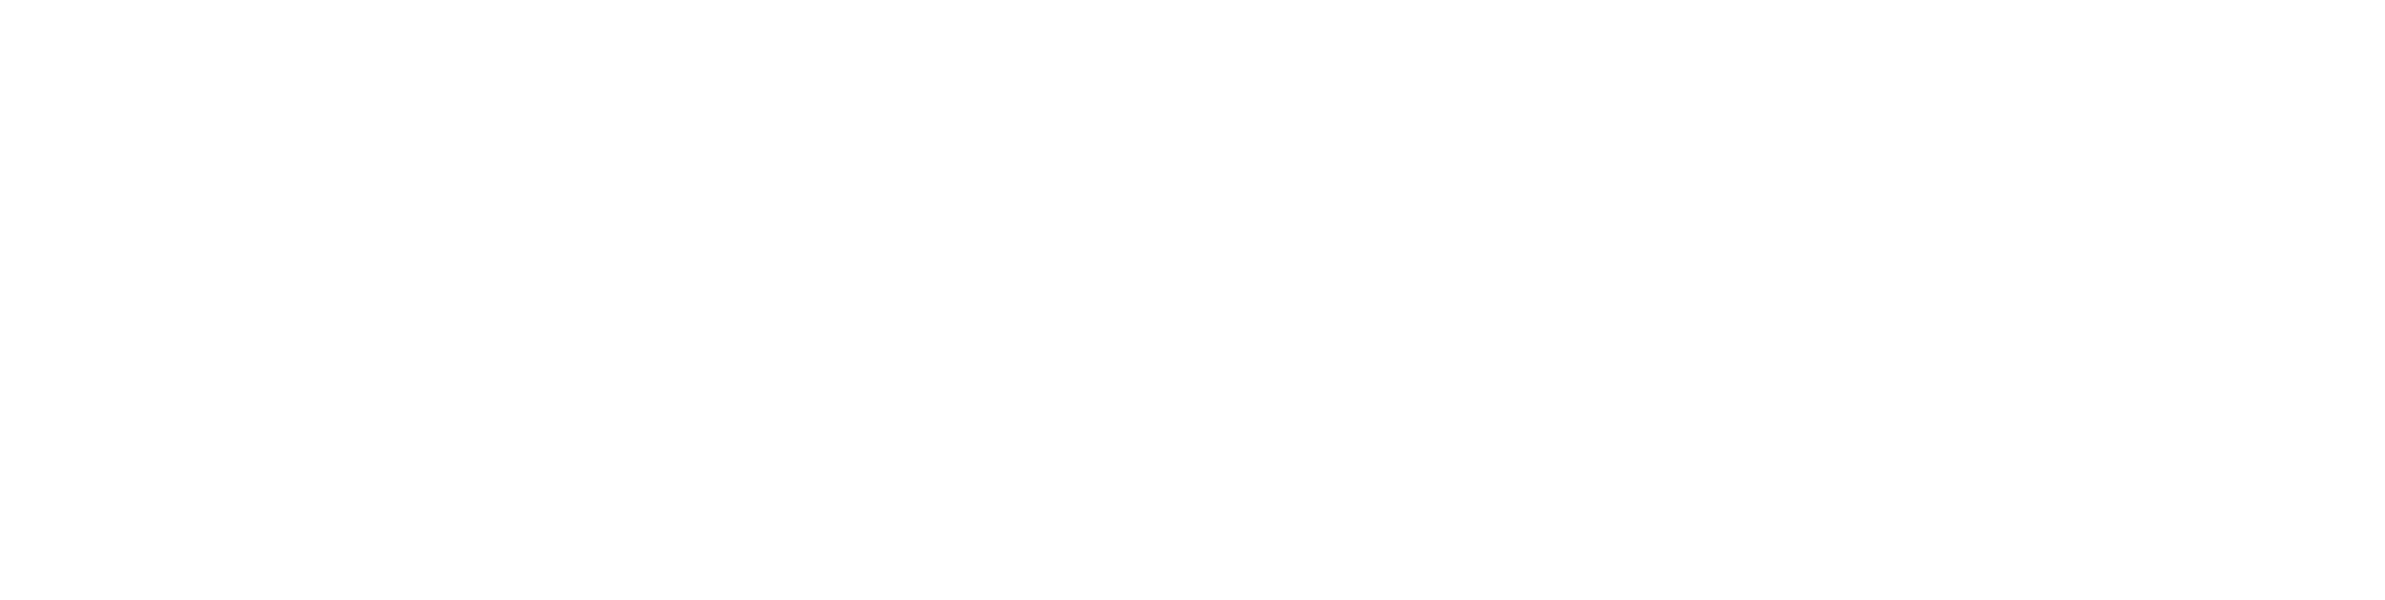 CPAWS Logo